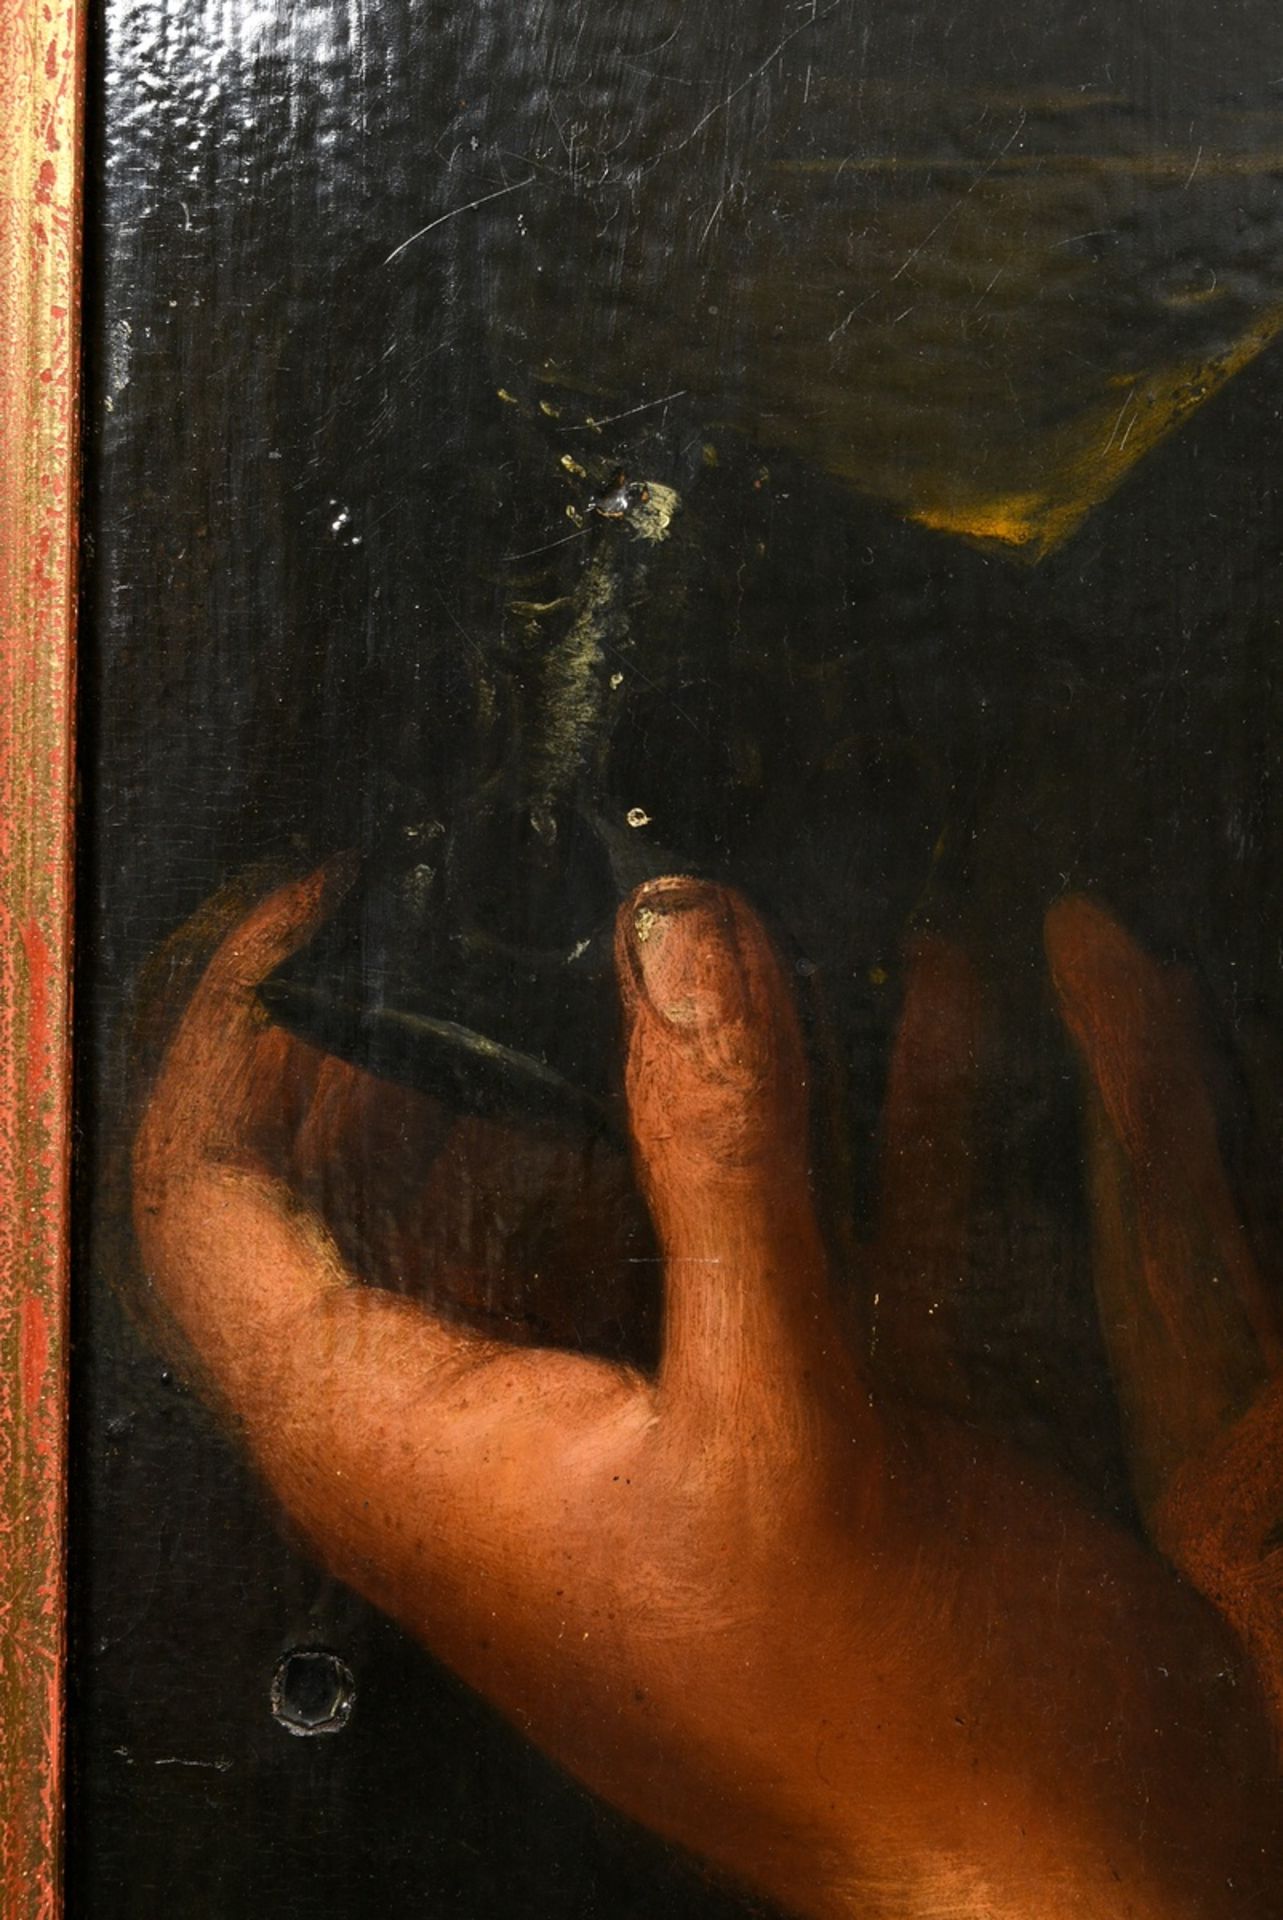 Bijlert, Jan Harmensz. van (1598-1671) "Drinking Man" after Gerrit van Honthorst, oil/wood, verso o - Image 7 of 12